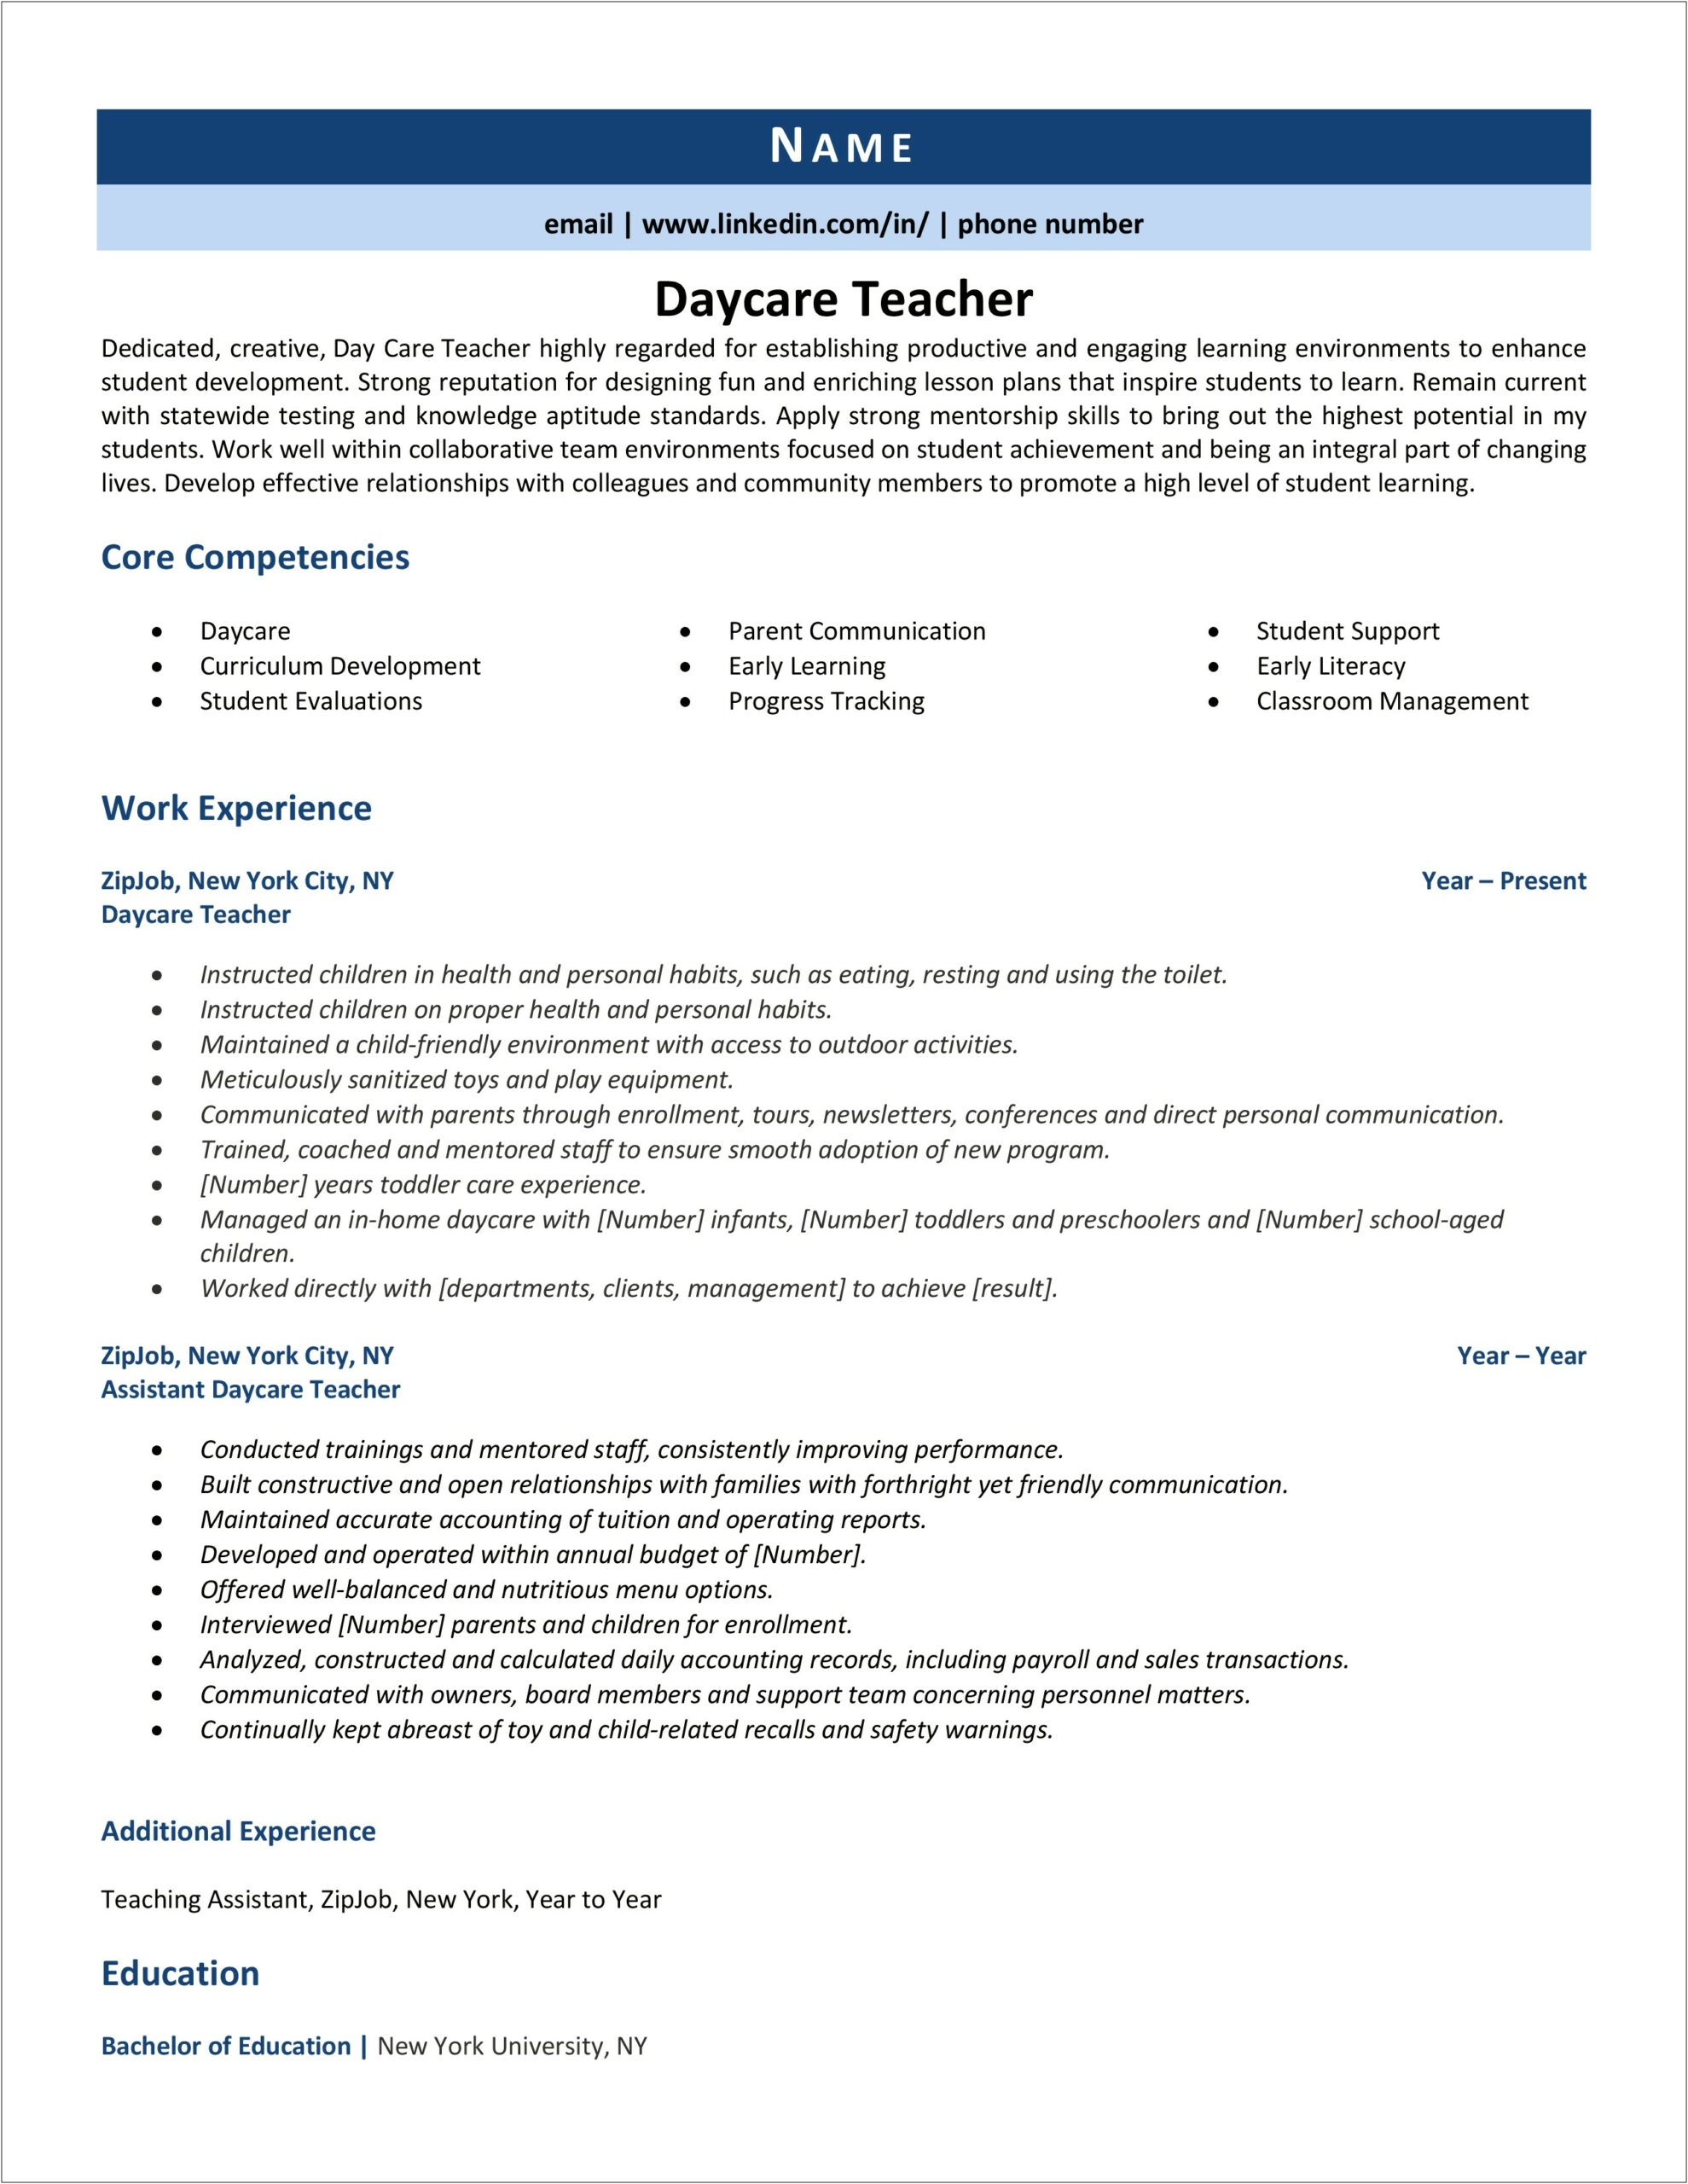 Sample Resume Format For Daycare Teachers